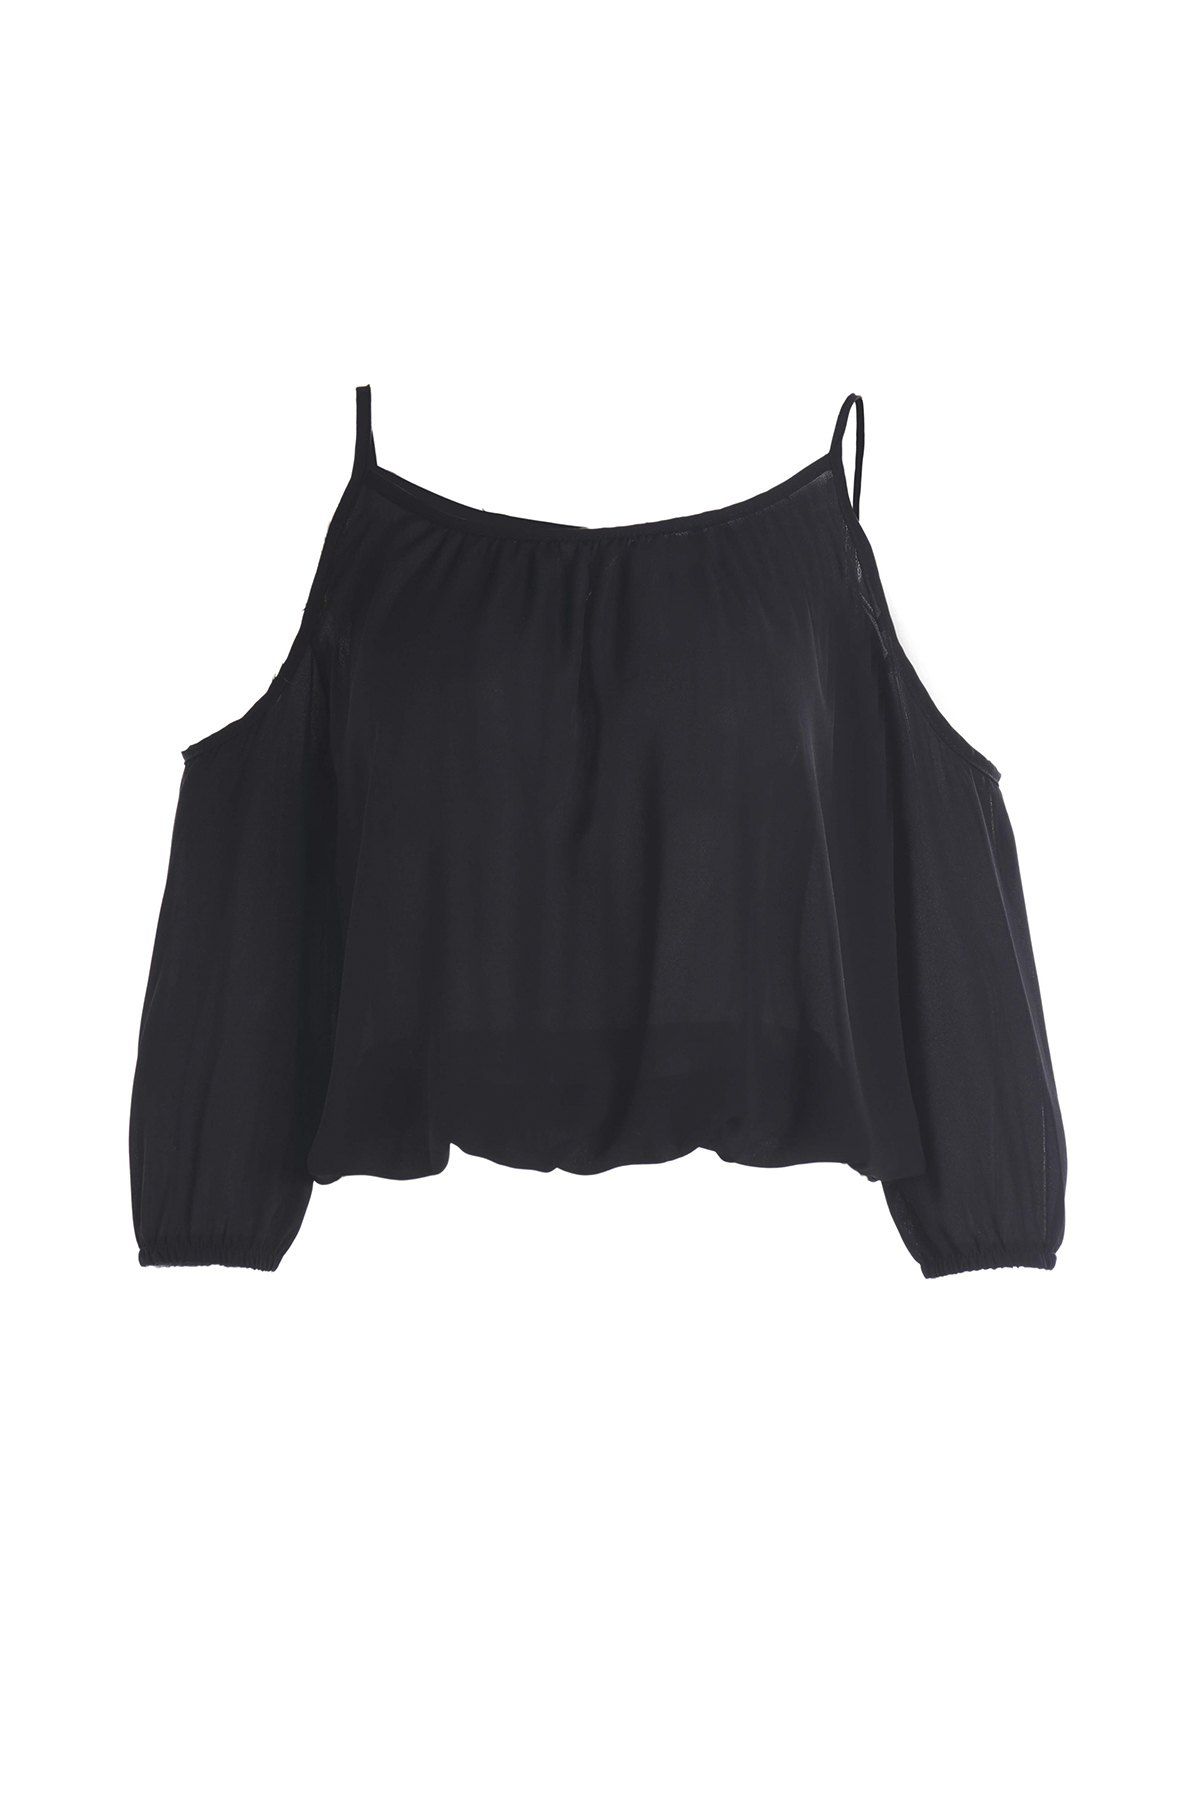 [21% OFF] Spaghetti Strap Black Half Sleeve T-Shirt For Women | Rosegal